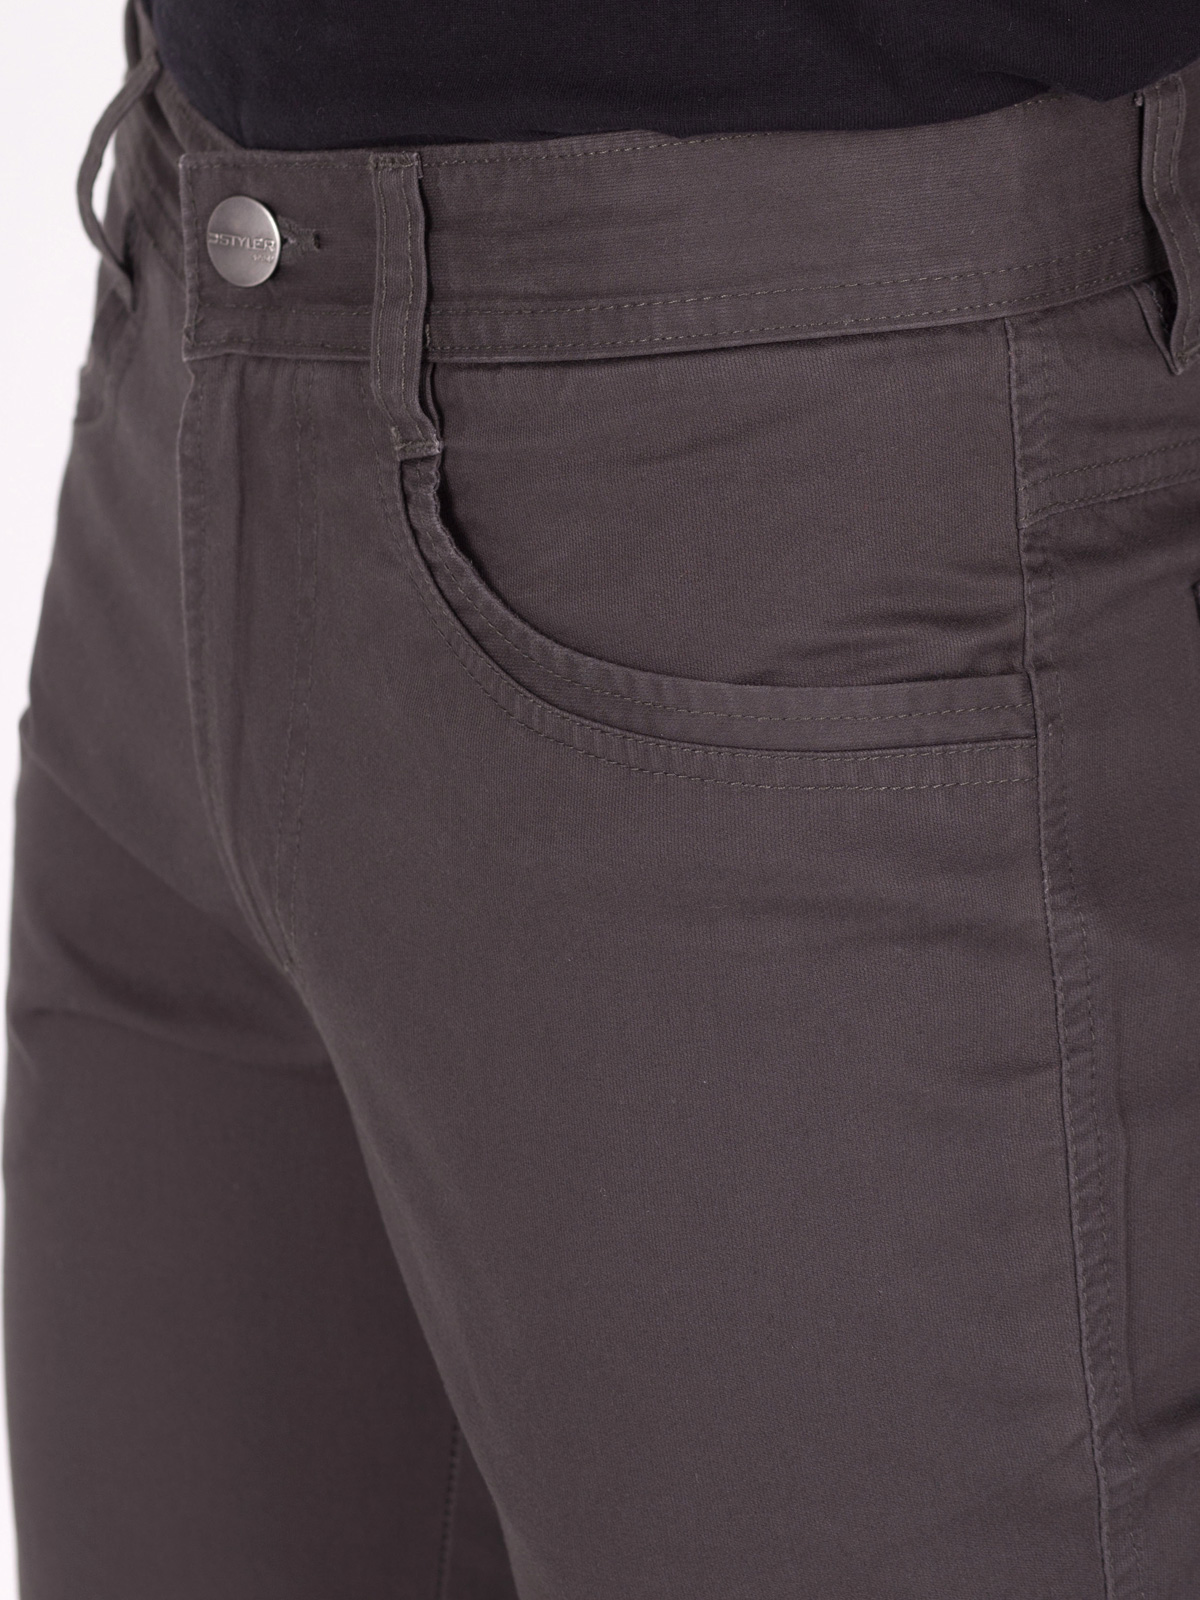 Graphite shorts - 67007 € 8.44 img2